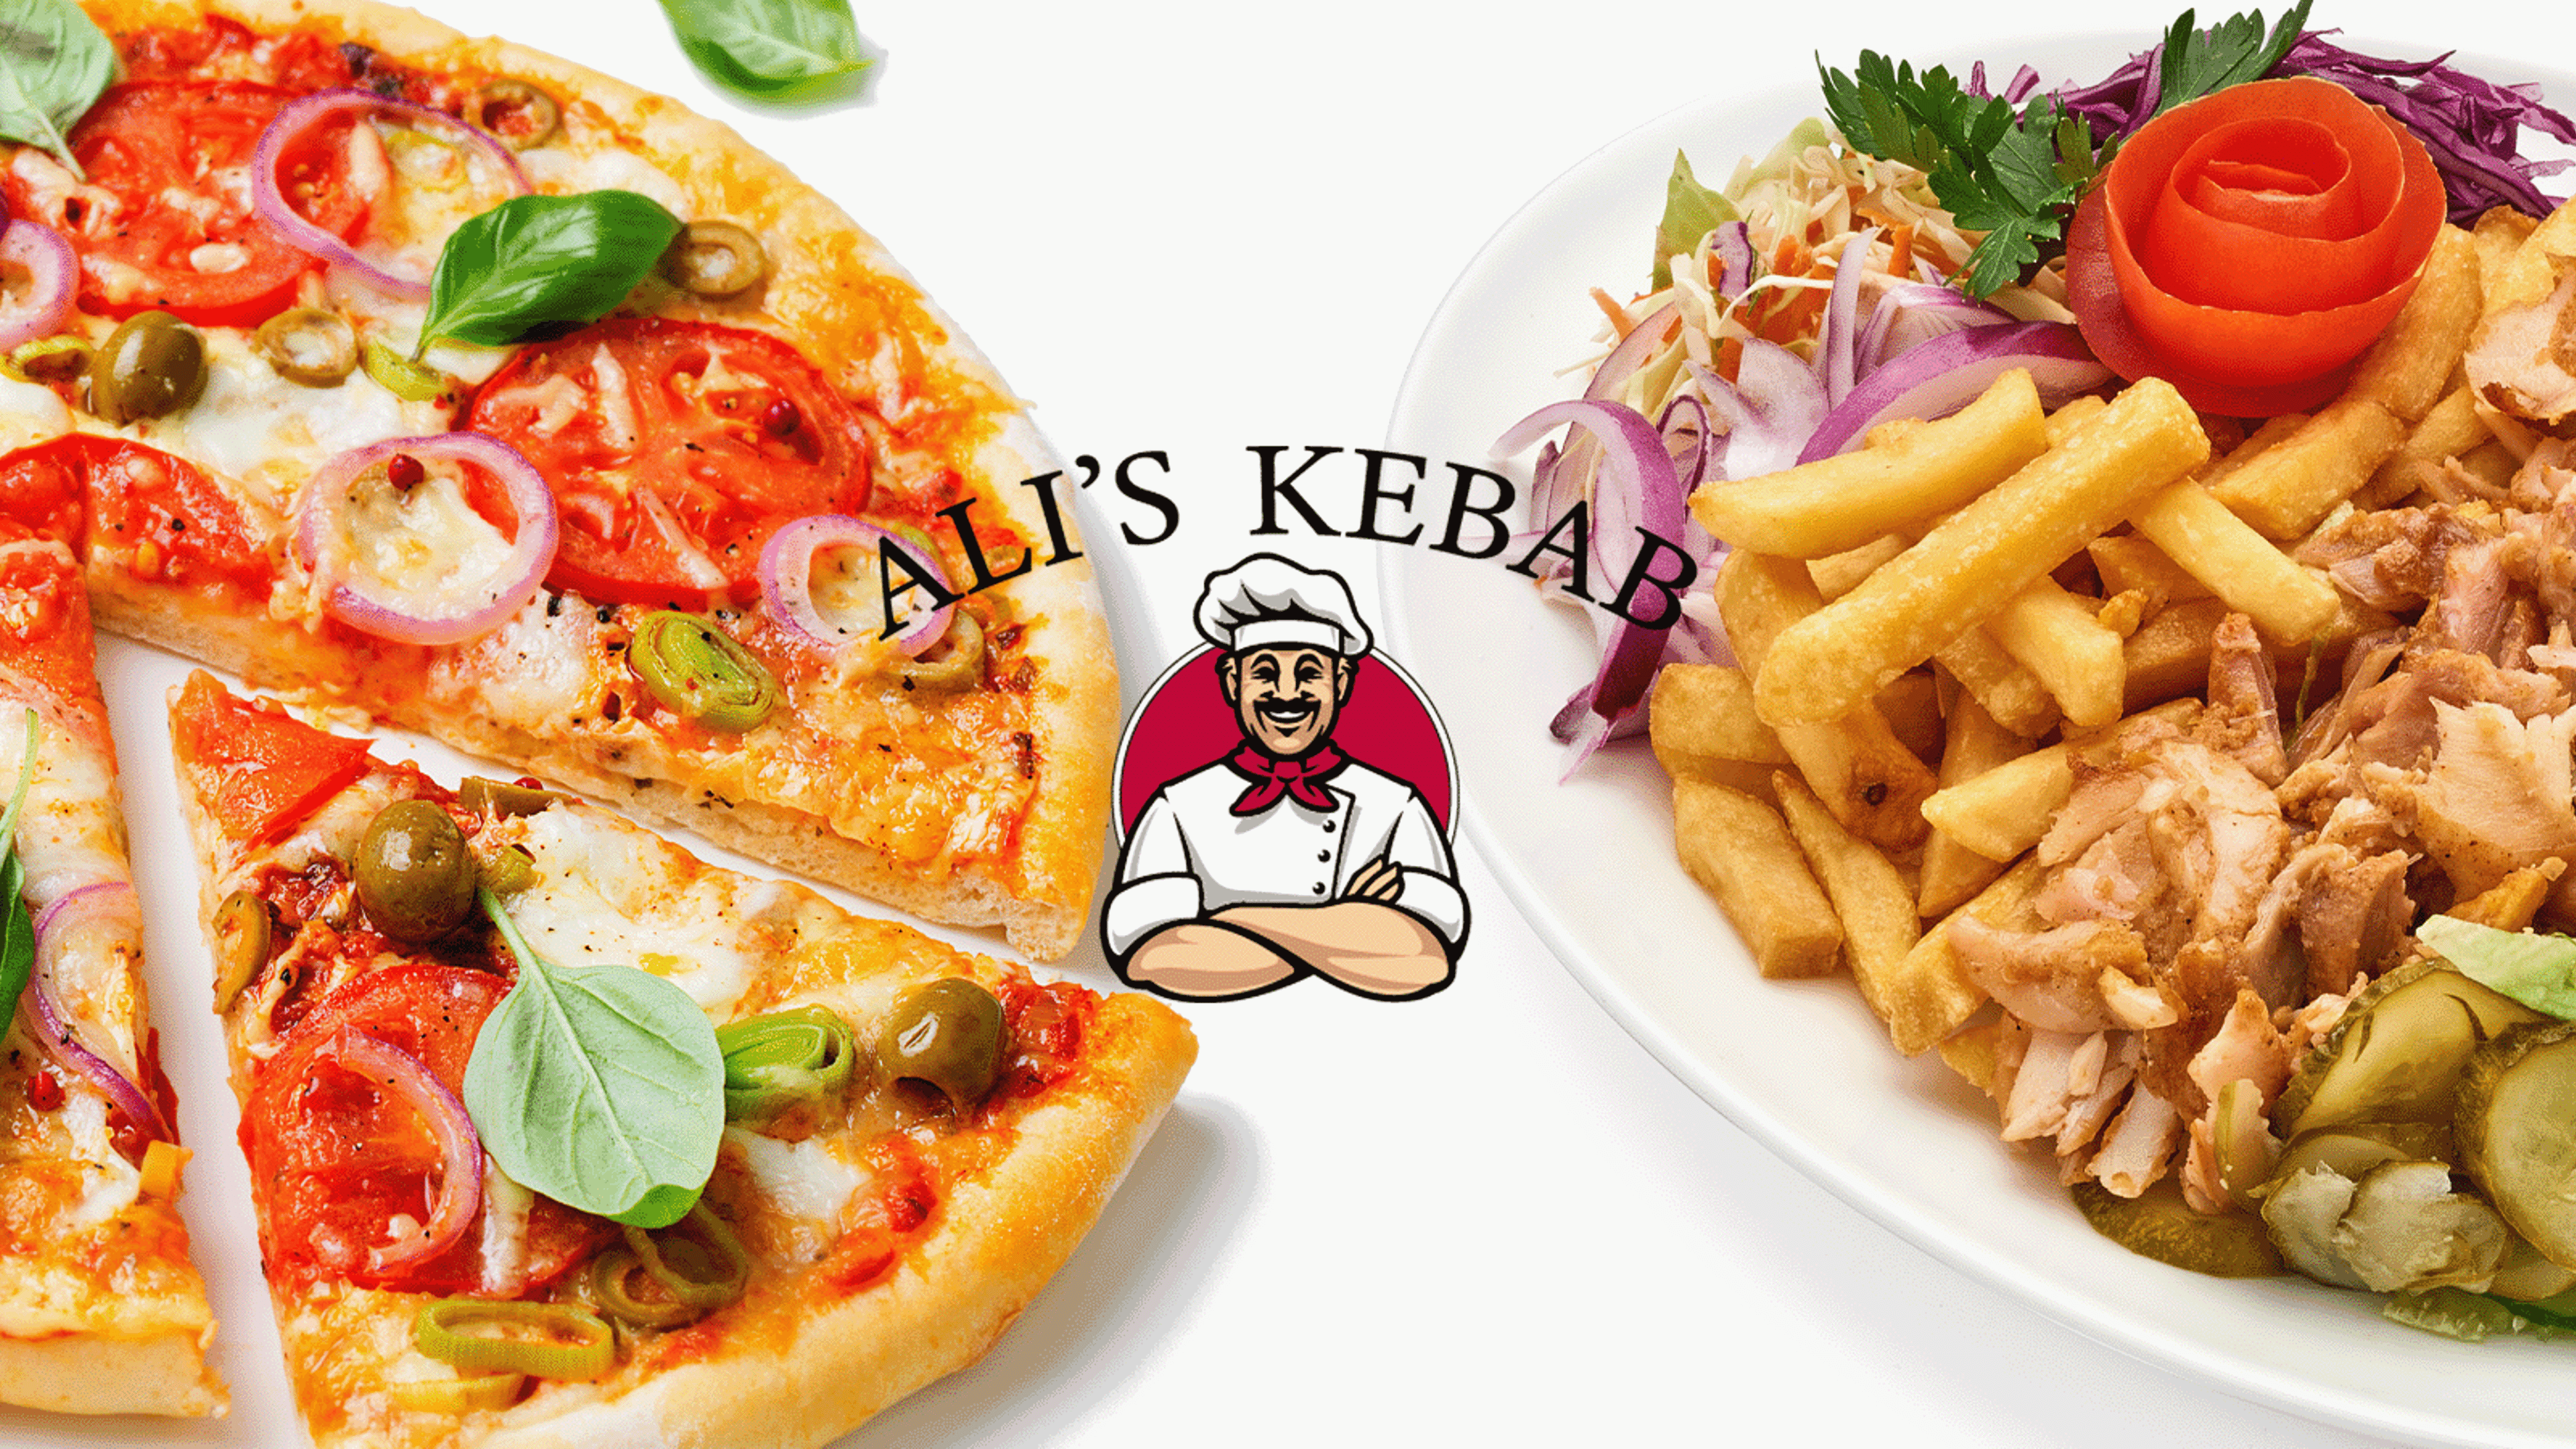 Ali's Kebab Bielefeld